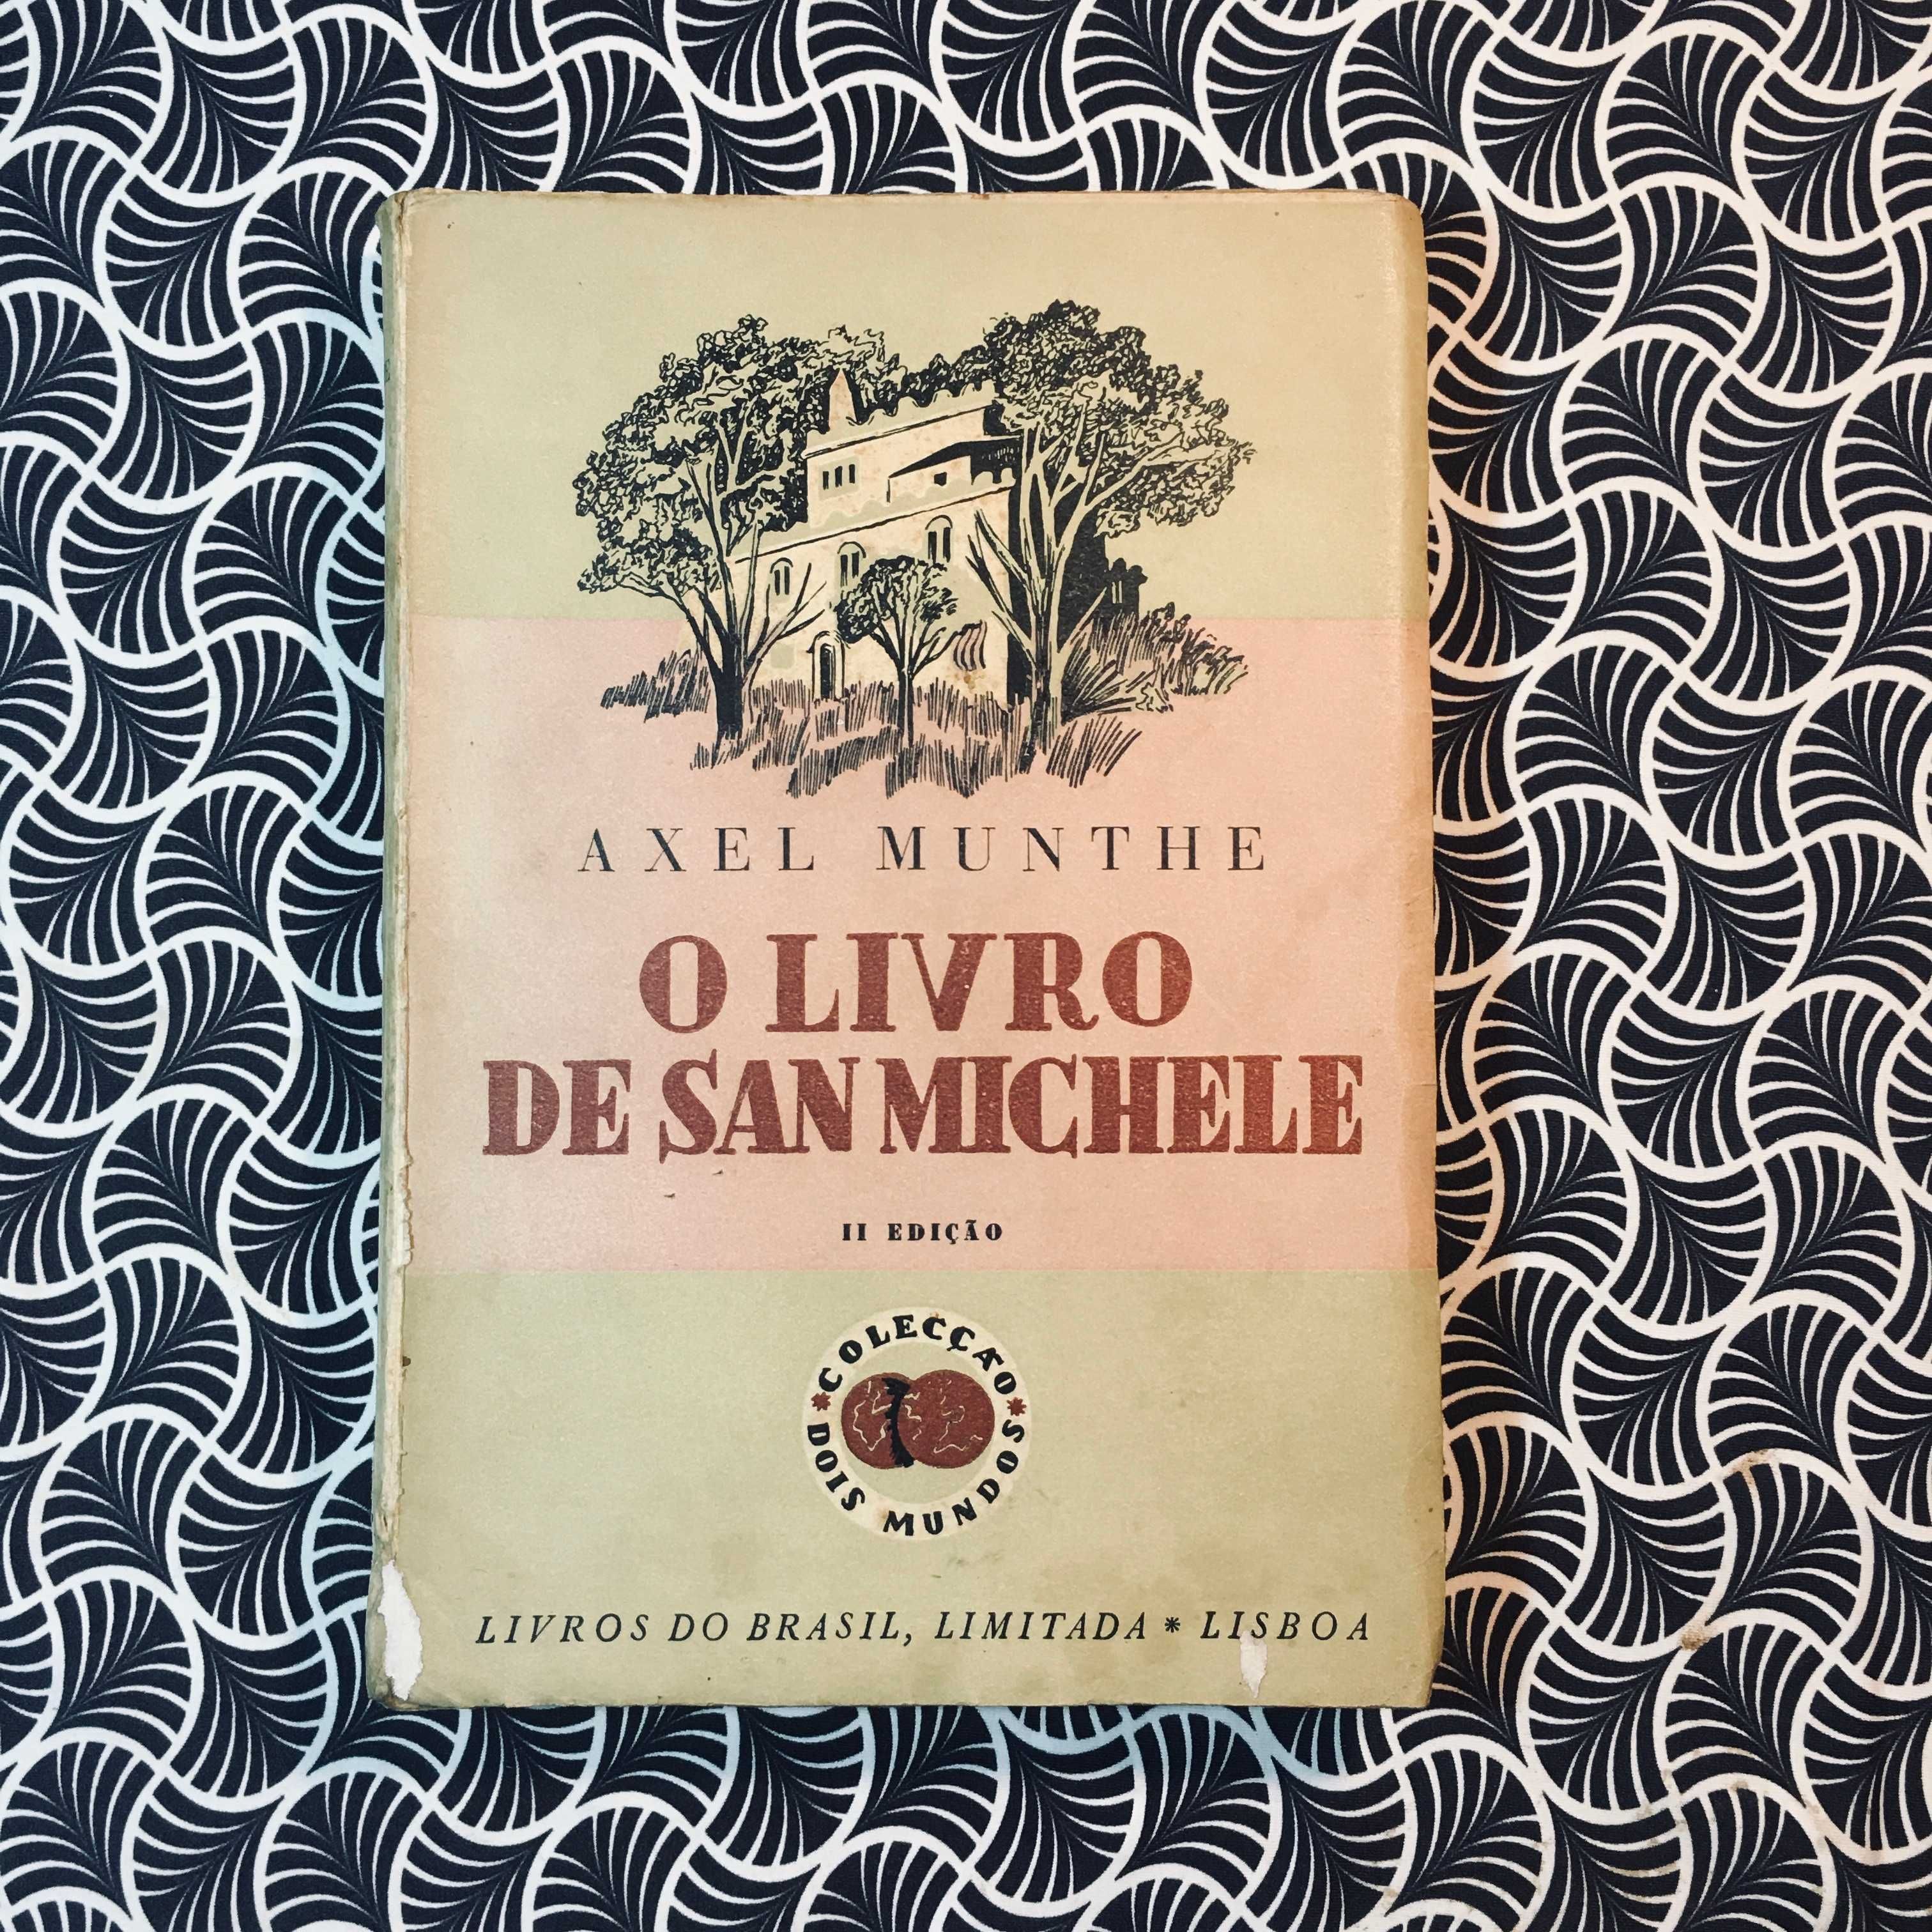 O Livro de San Michele - Axel Munthe